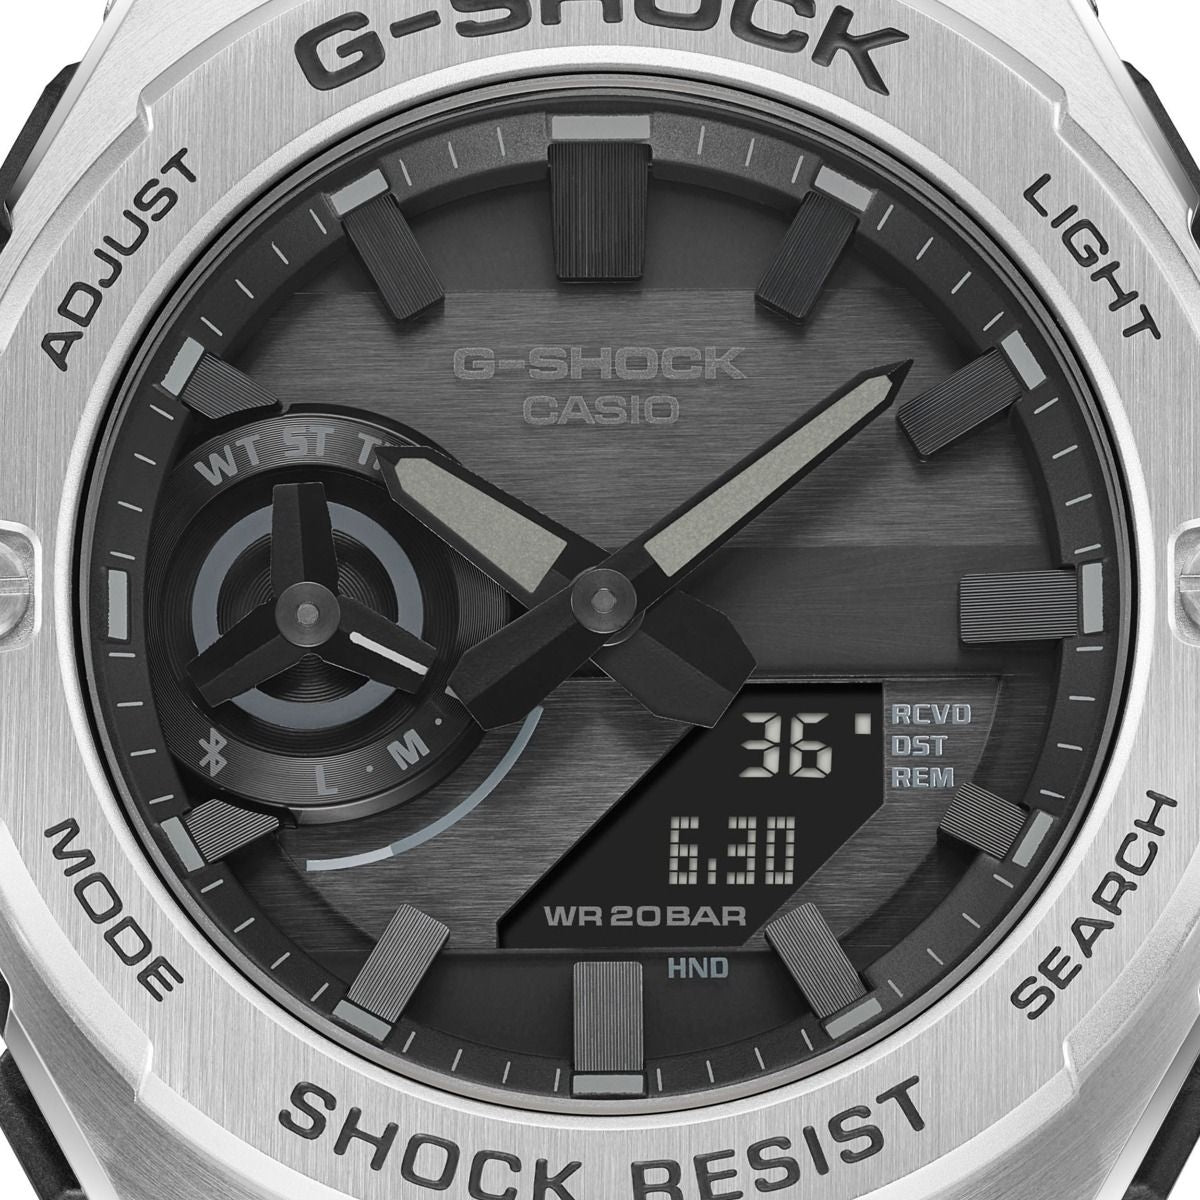 Orologio G-Shock GST-B500D-1A1ER in acciaio e carbonio